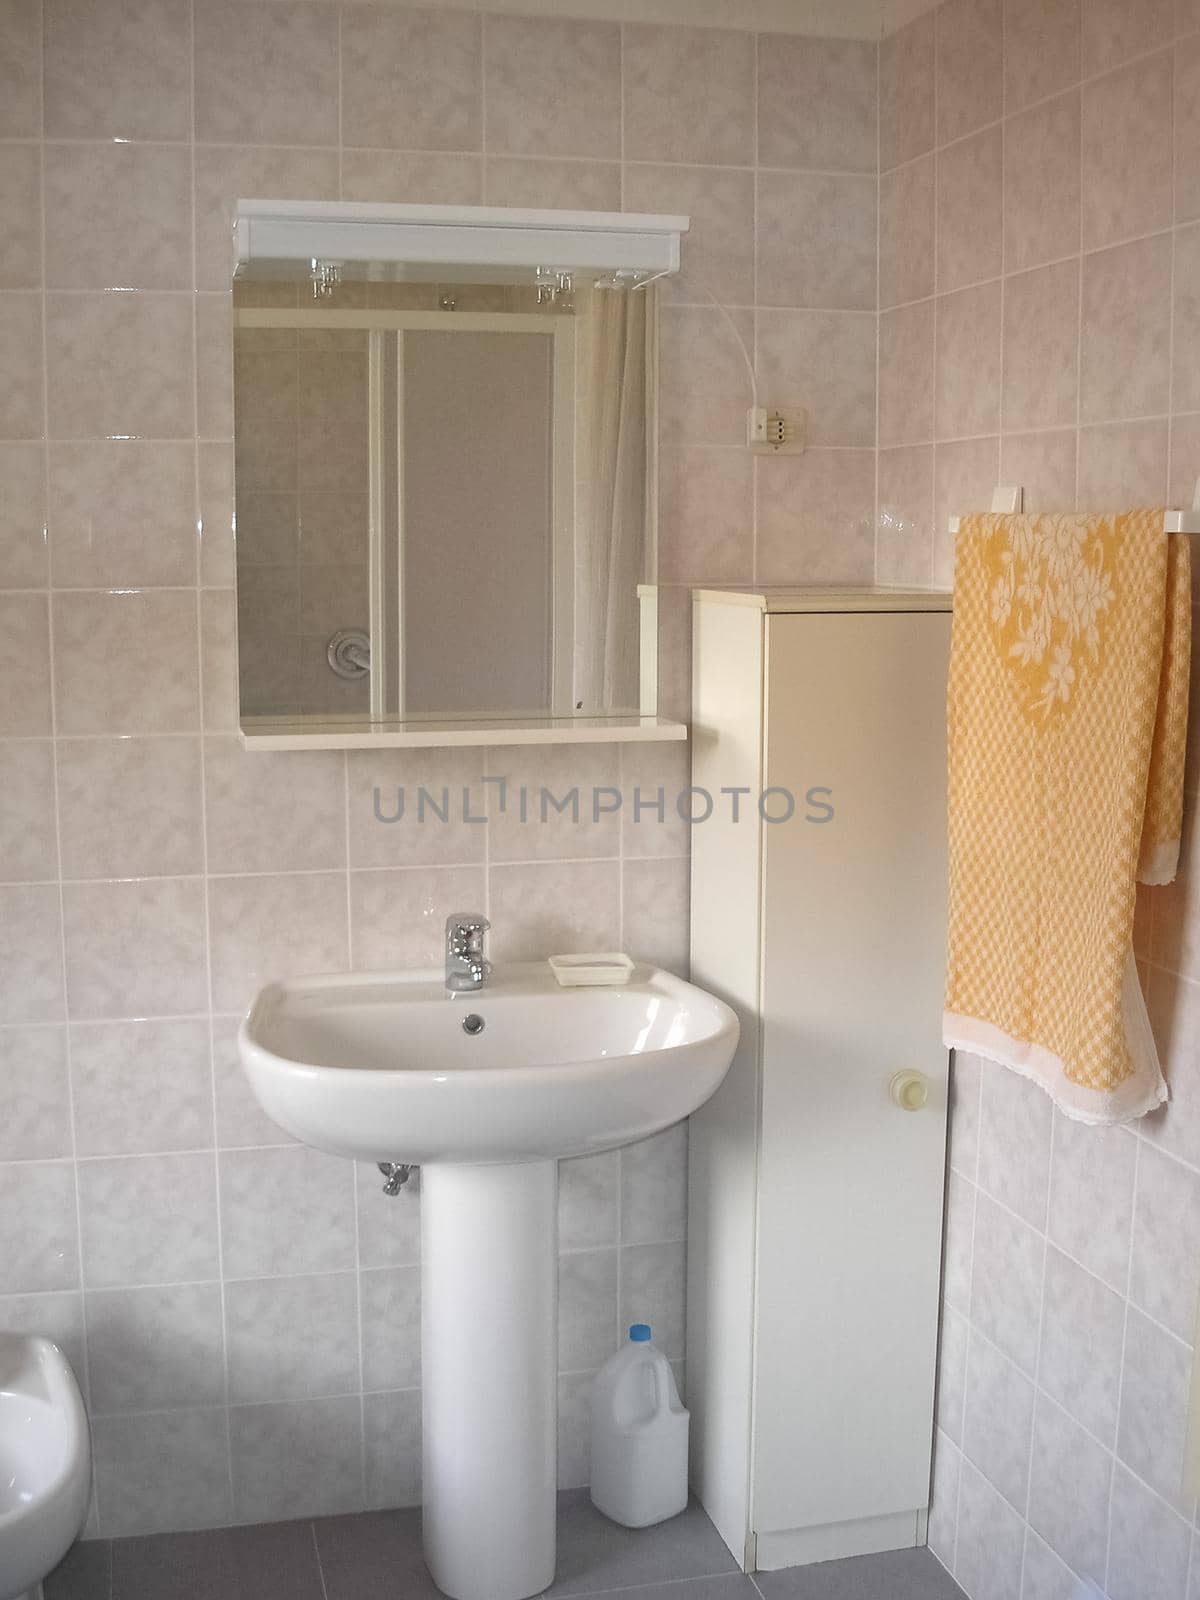 Residential bathroom basin by claudiodivizia